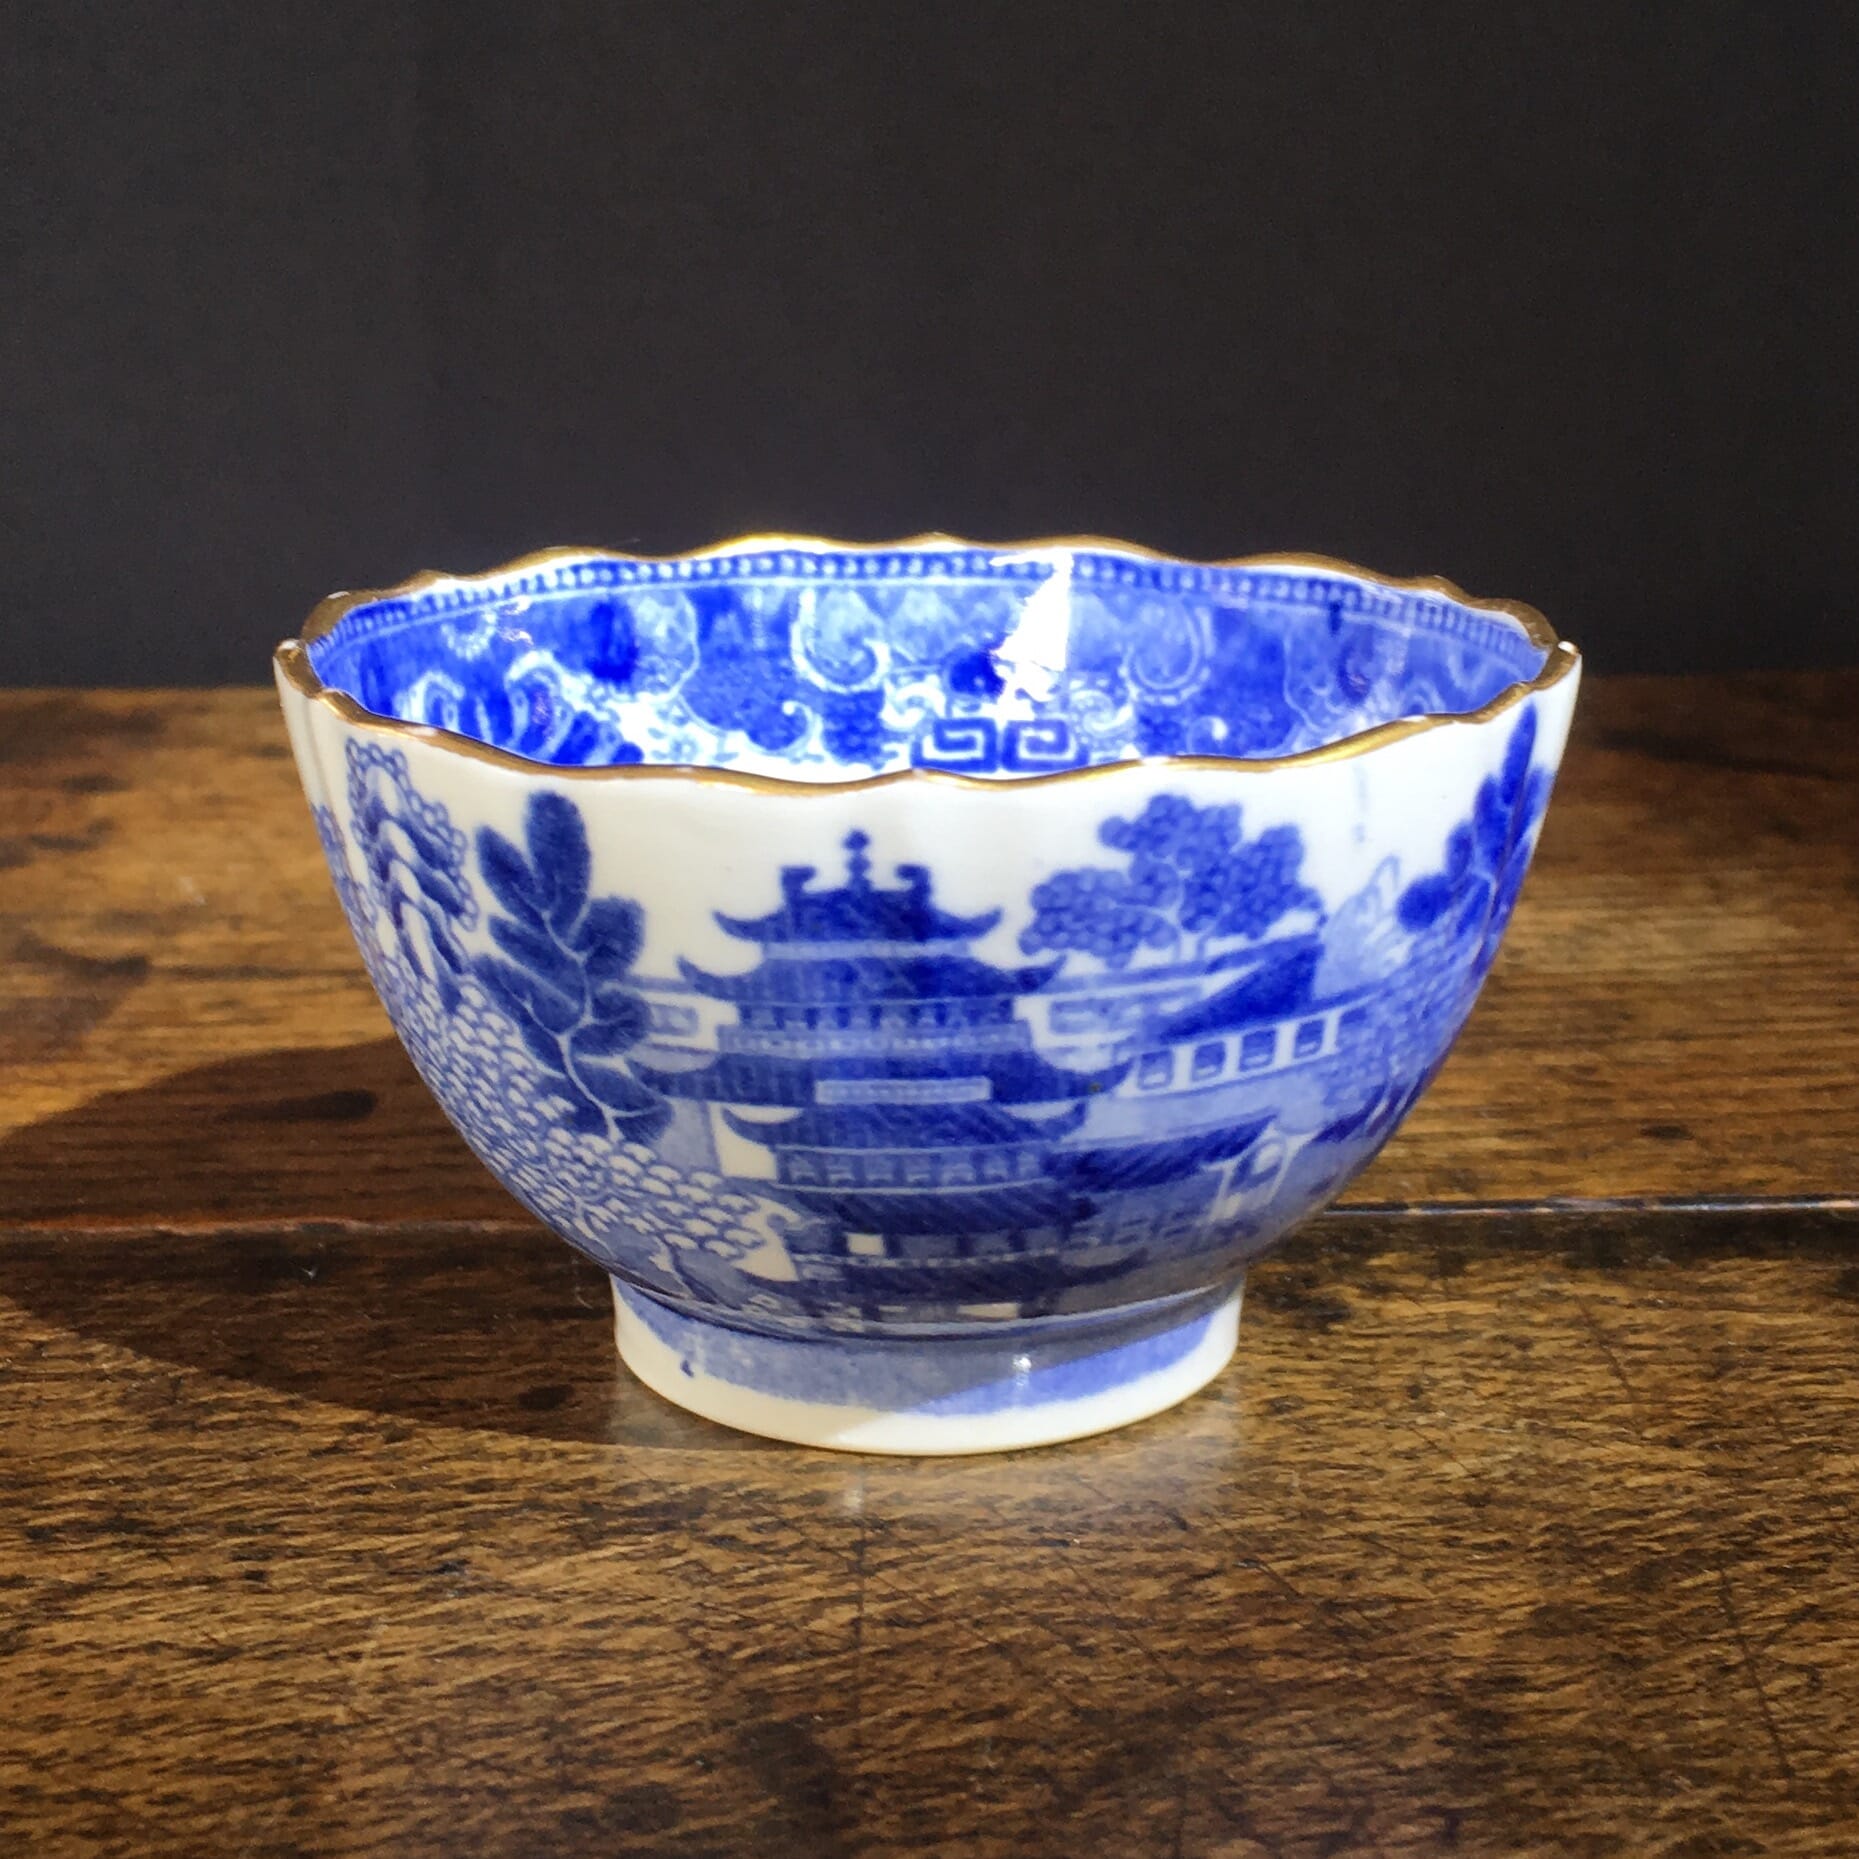 Spode porcelain tea bowl, 'Pagoda' pattern, c. 1815 -0